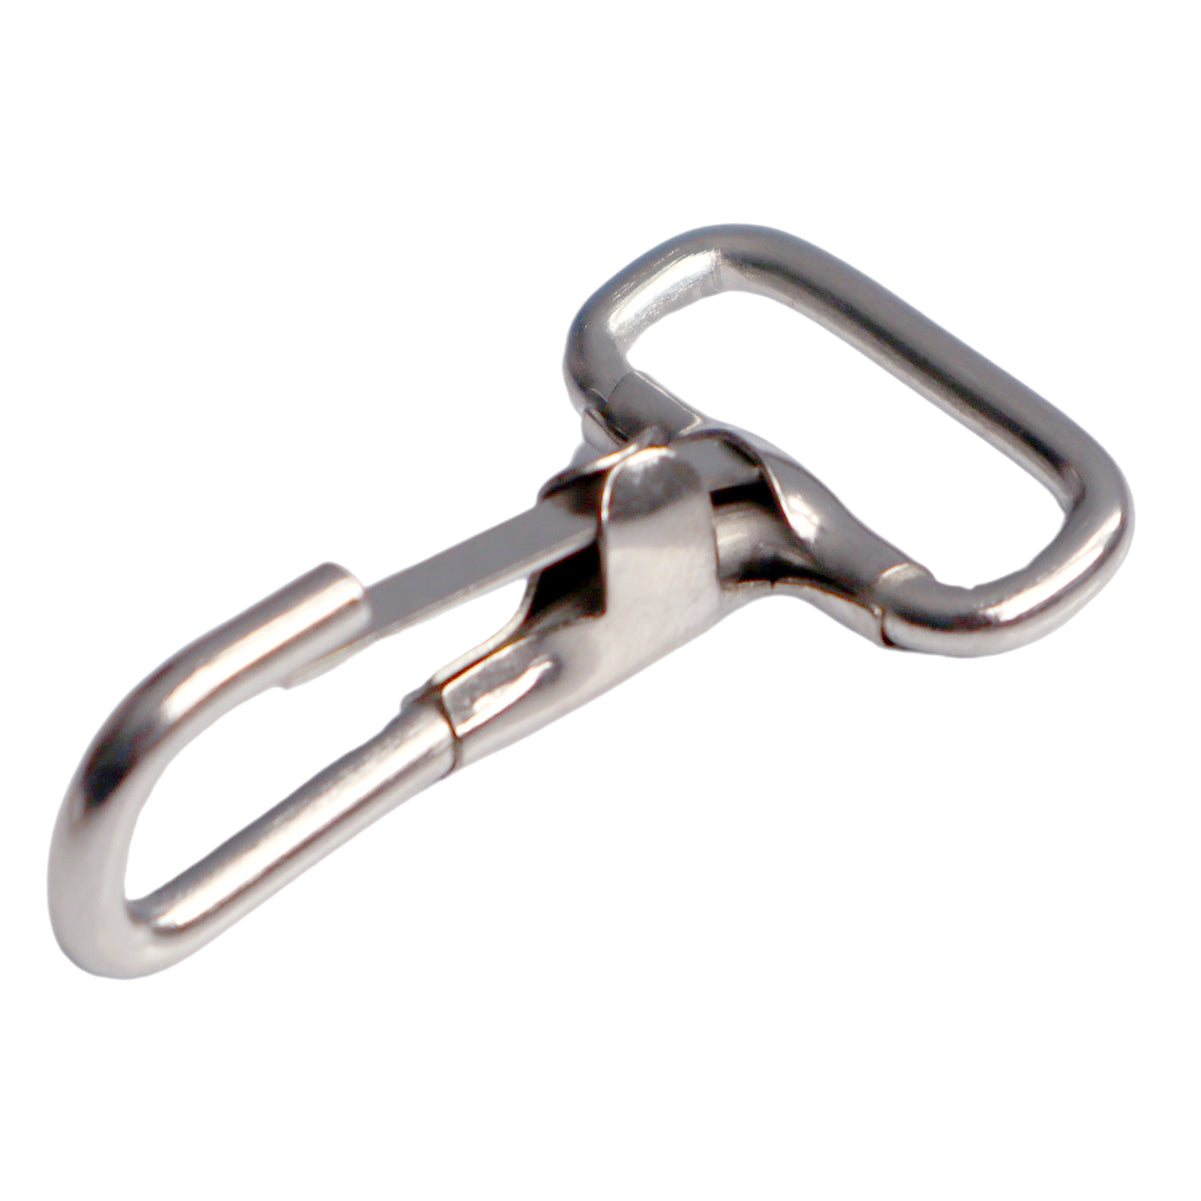 Non swivel metal j hook with 3/4" D ring - DIY Lanyard and Craft Hooks (P/N 6920-2400)